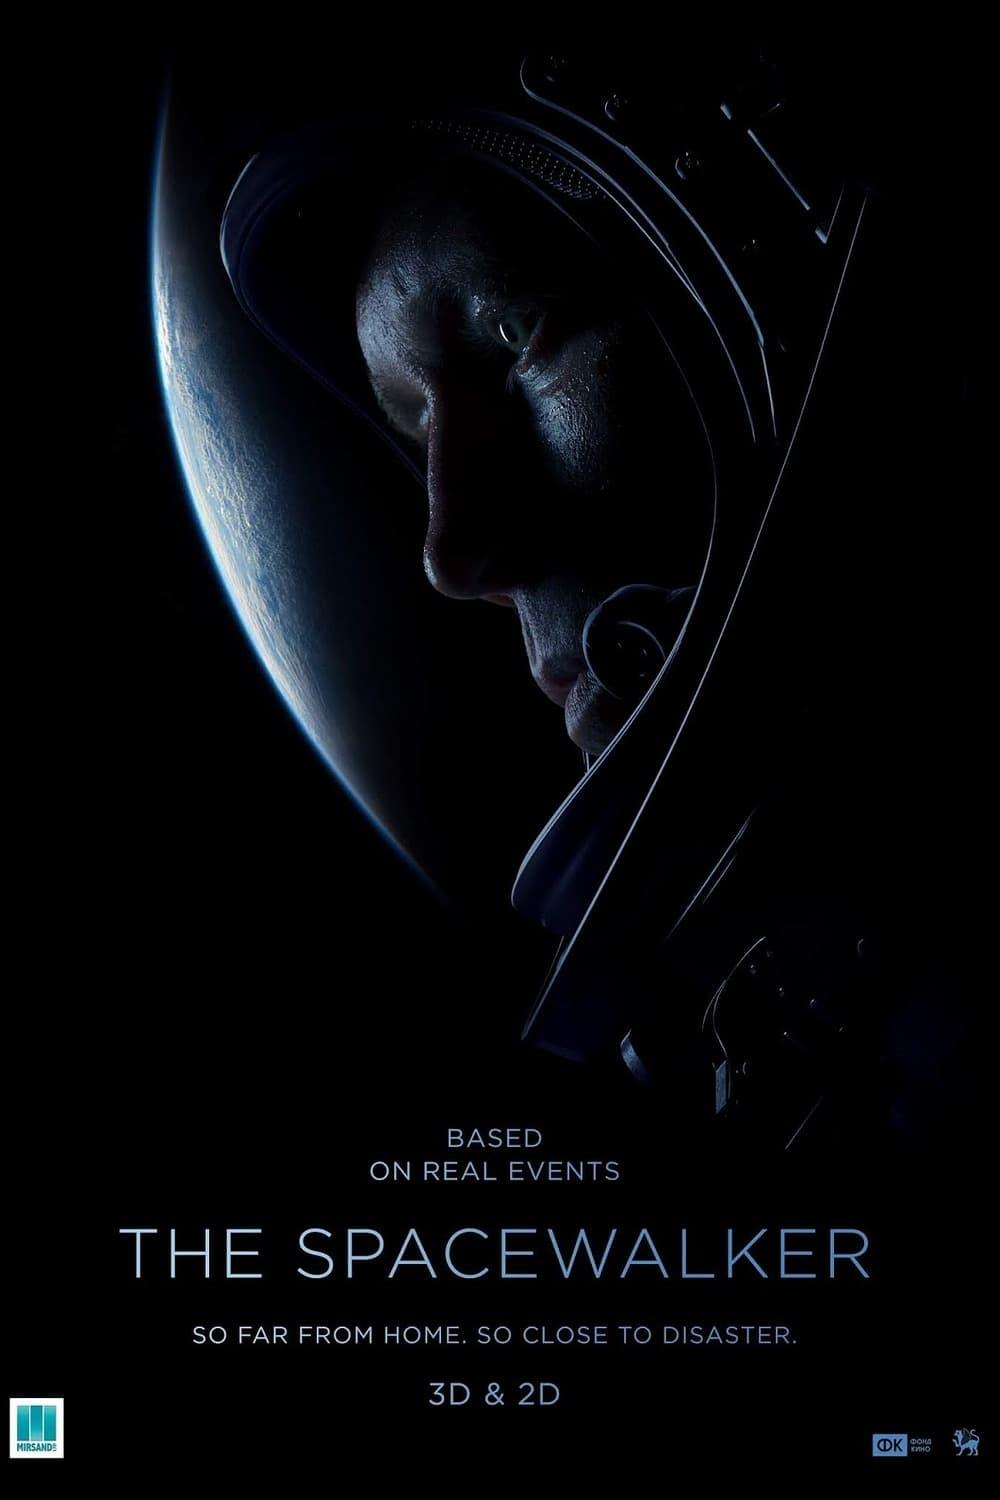 The Spacewalker poster